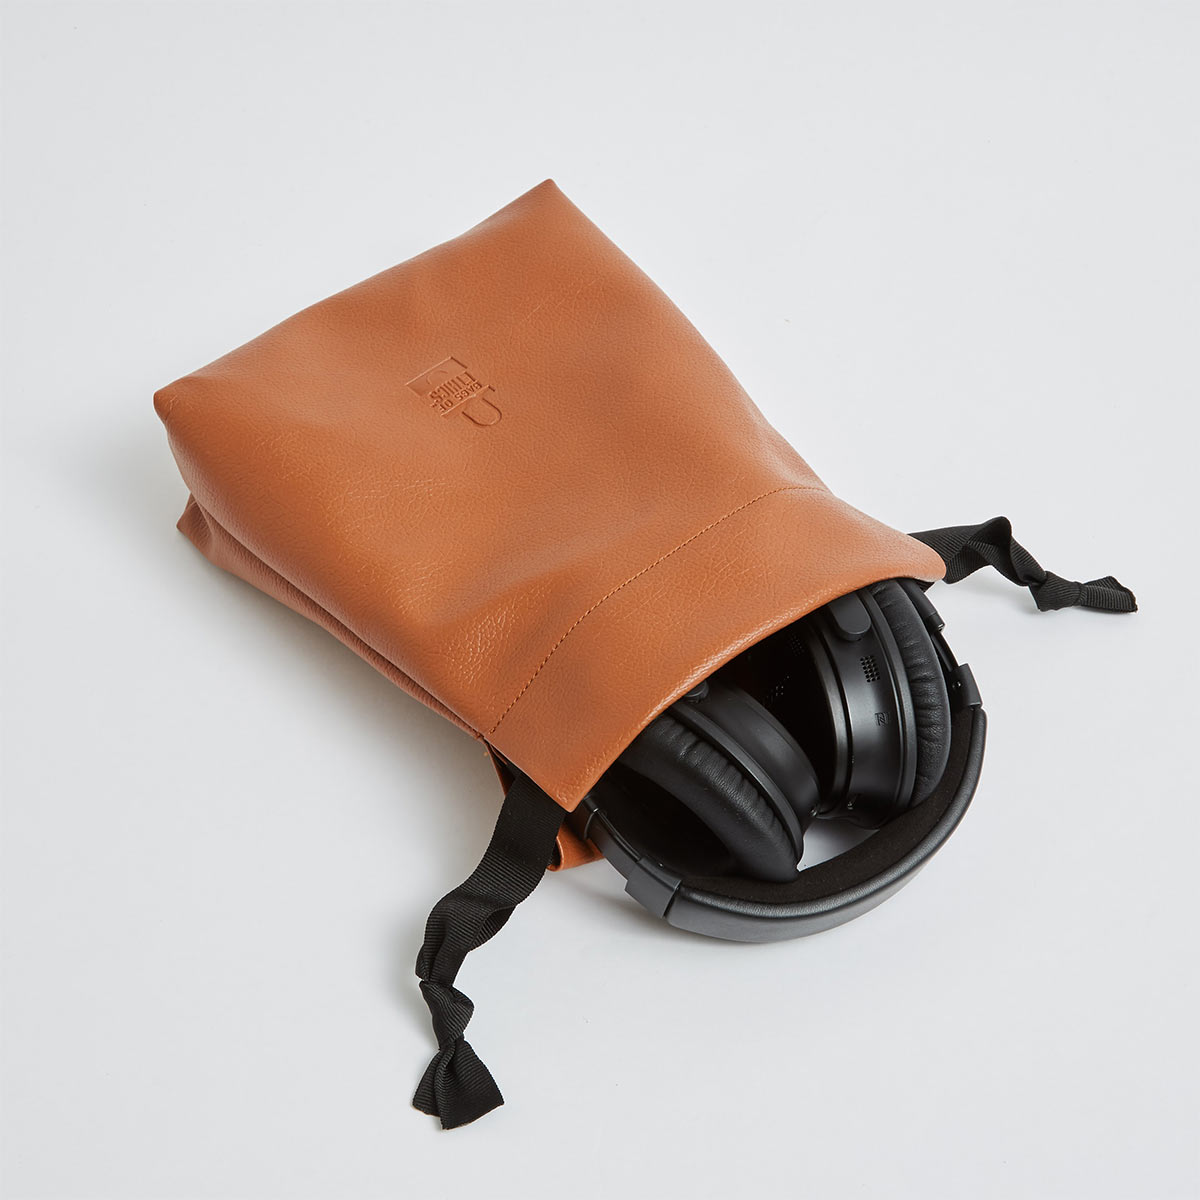 Vegan leather handbag